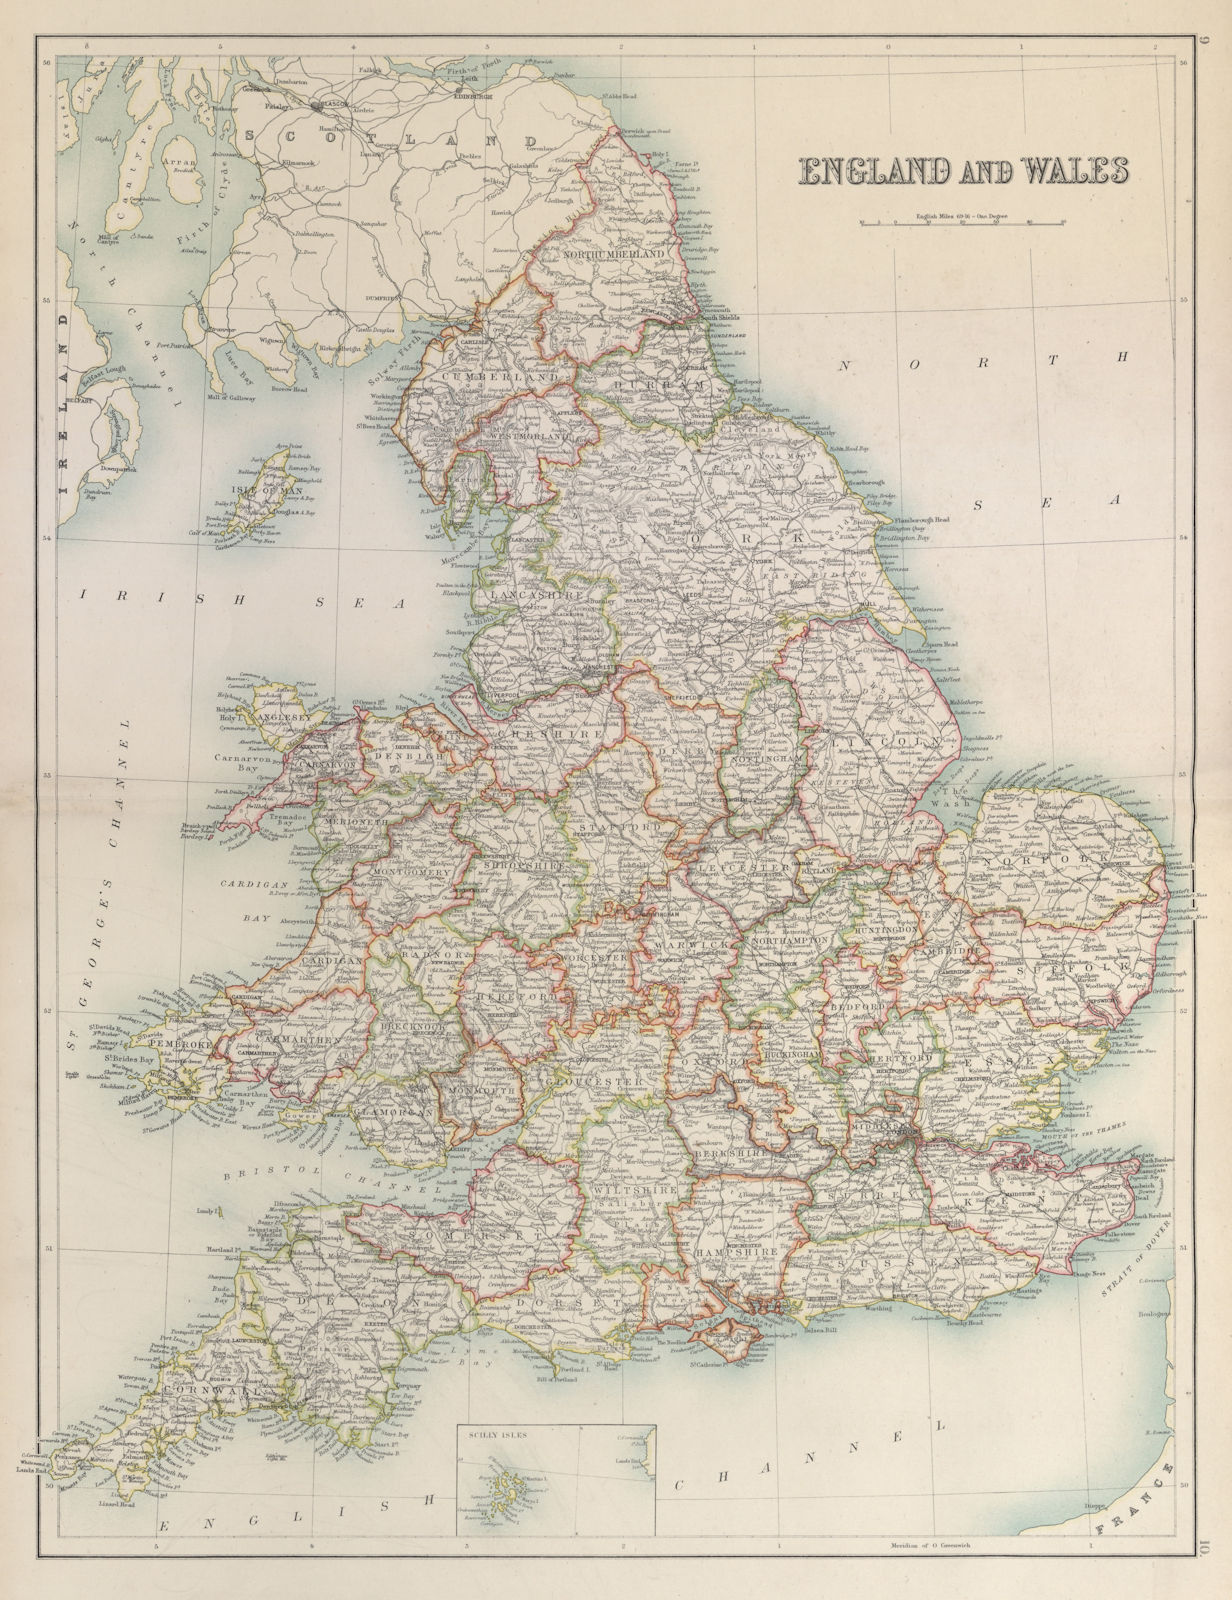 England & Wales. Counties & railways. BARTHOLOMEW 1898 old antique map chart